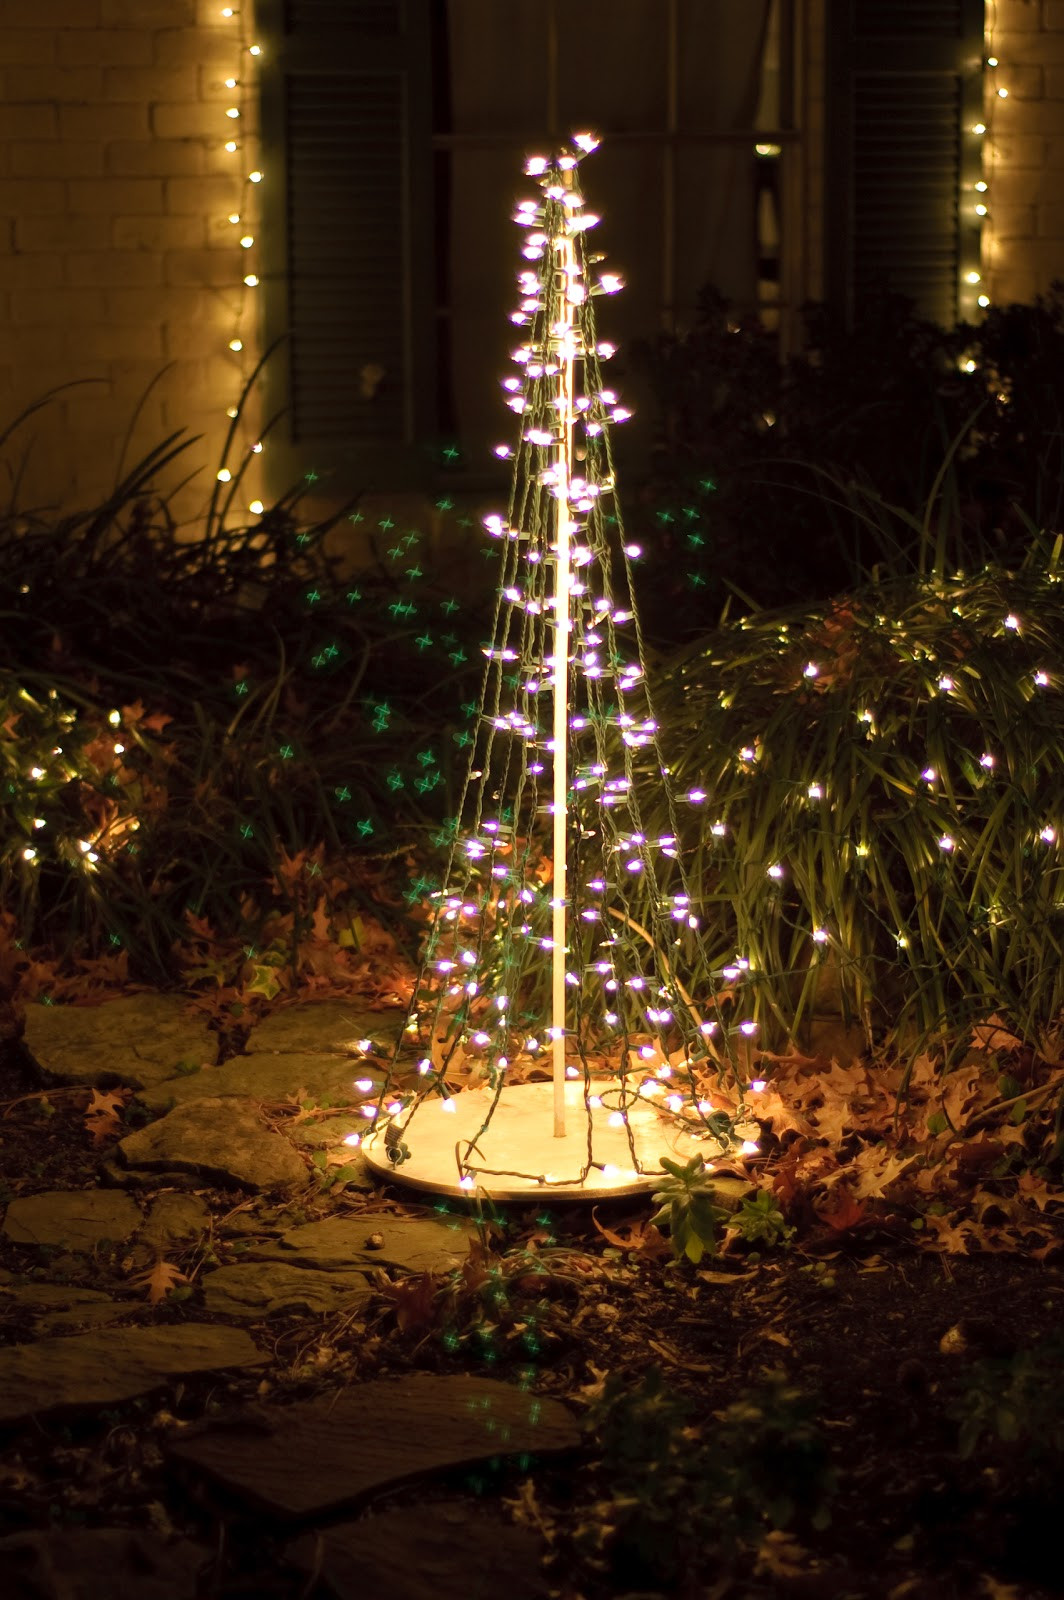 Outdoor Christmas Tree With Lights
 Lilybug Designs Outdoor Christmas Tree